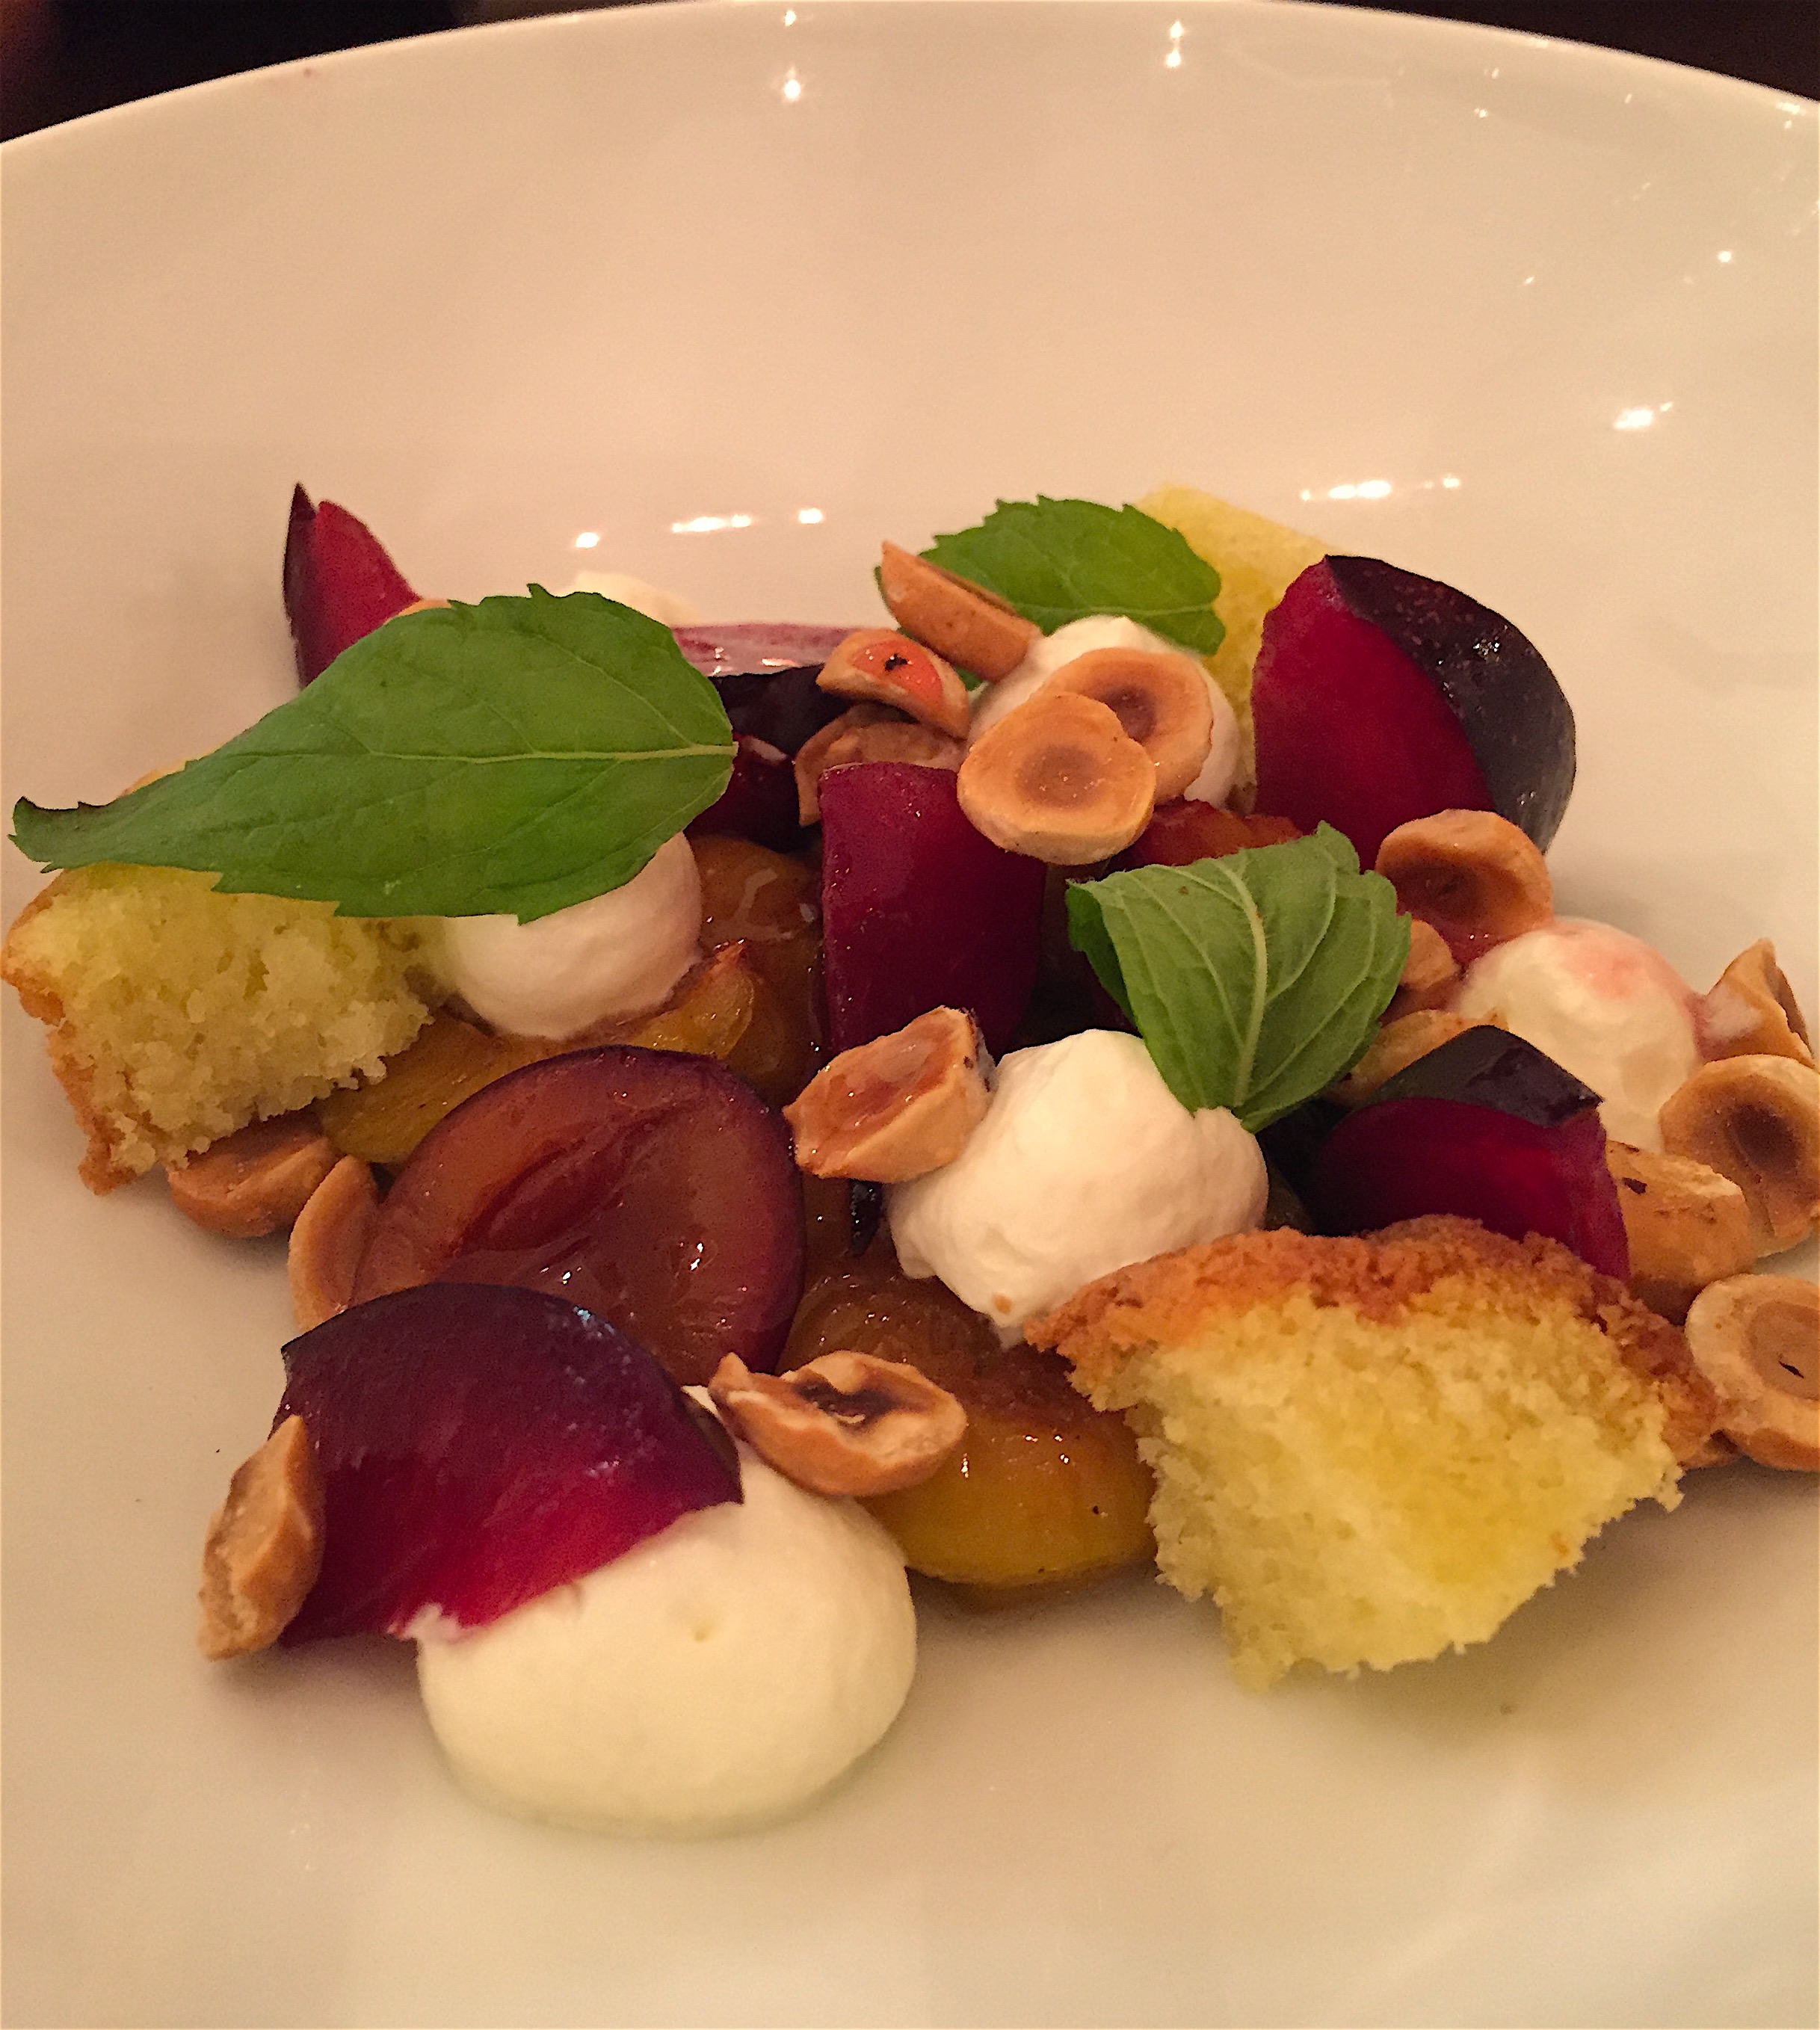 Eels - desserts of roasted plums@ Alexander Lobrano